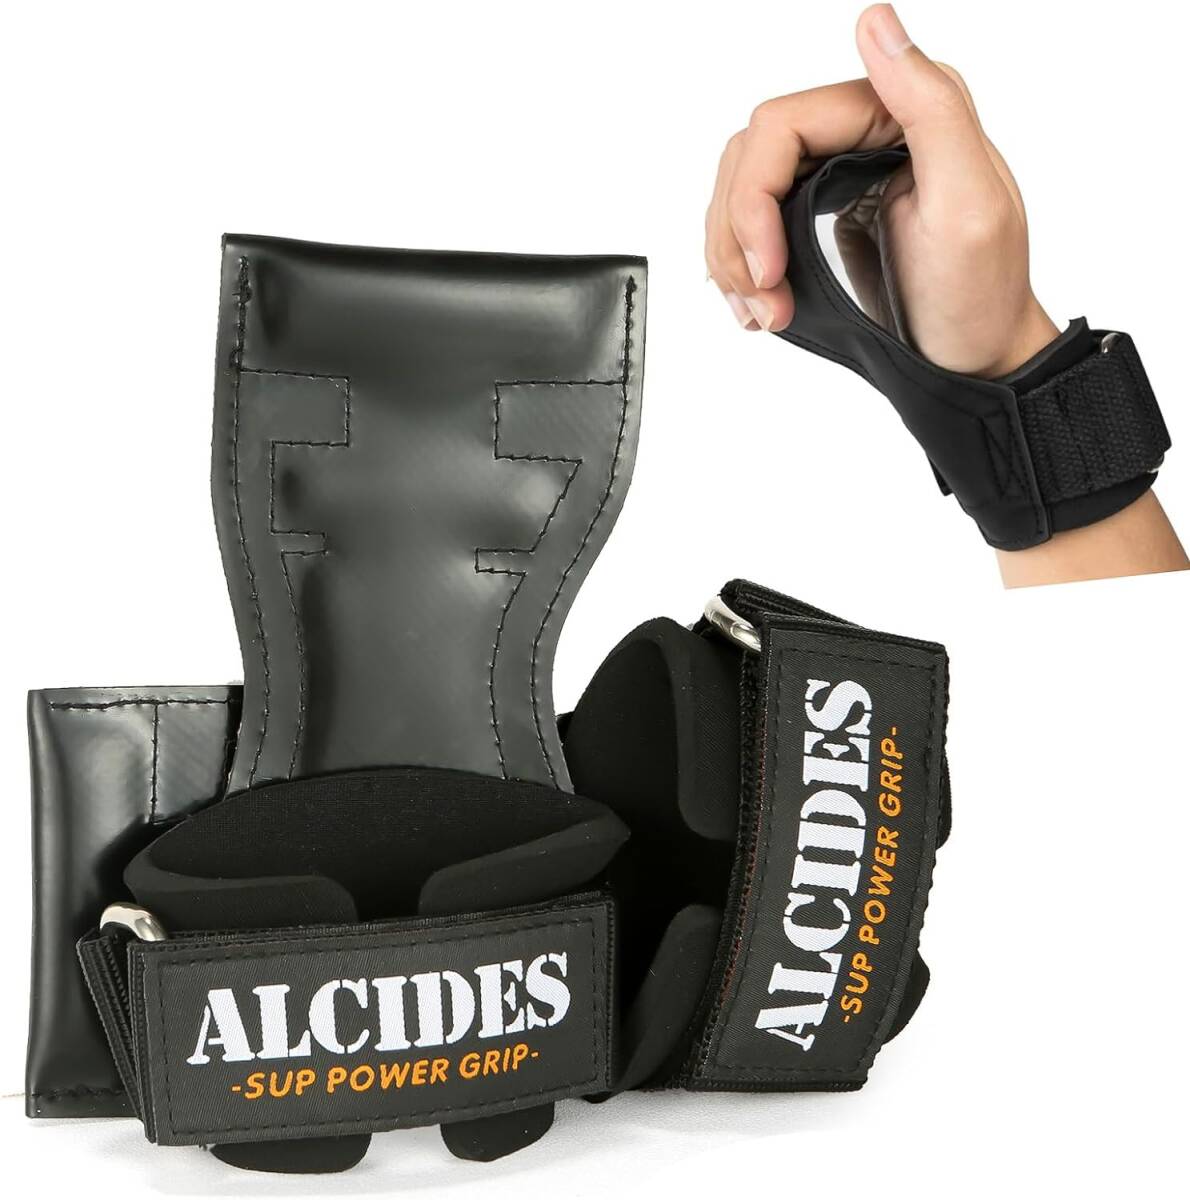 Alcides power grip [SUP].tore glove . power assistance Raver grip . shide glove tore person -g for kega prevention slip prevention 